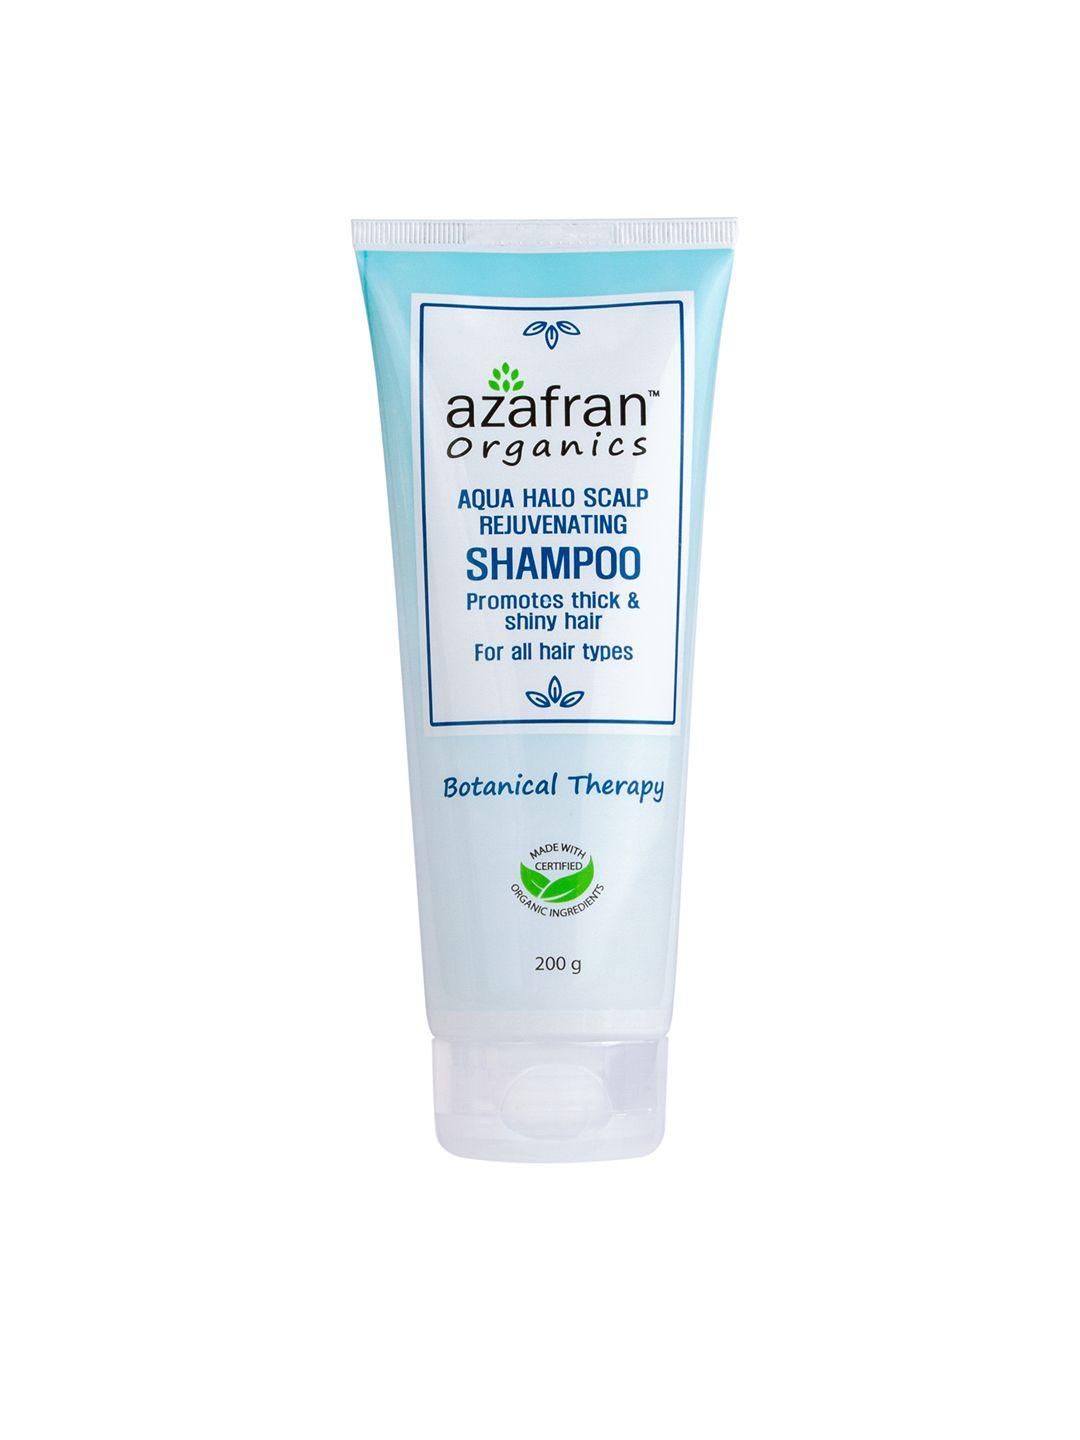 azafran aqua halo scalp rejuvenating shampoo 200 g